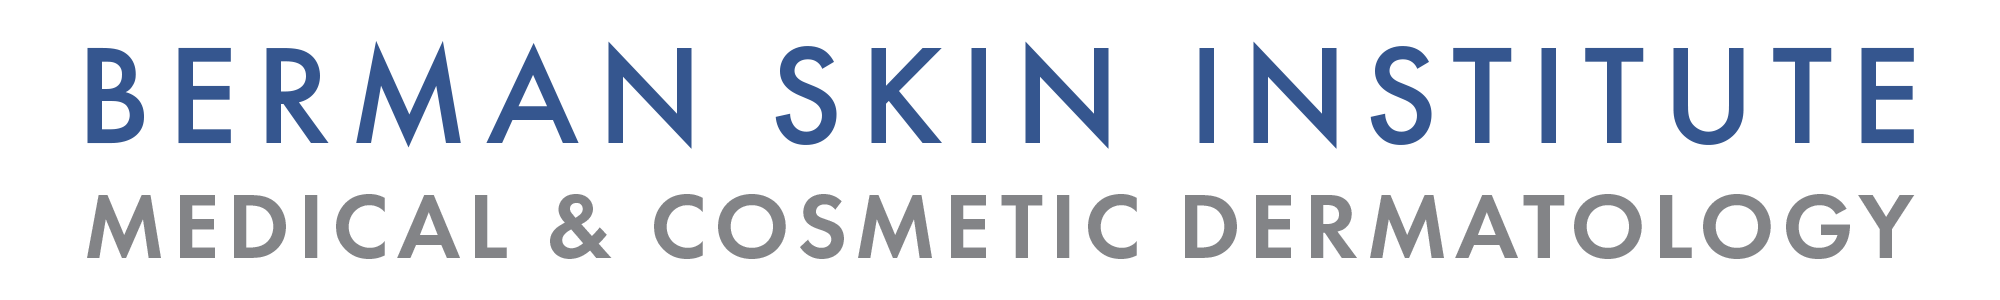 berman skin institute medical cosmetic dermatology logo new2